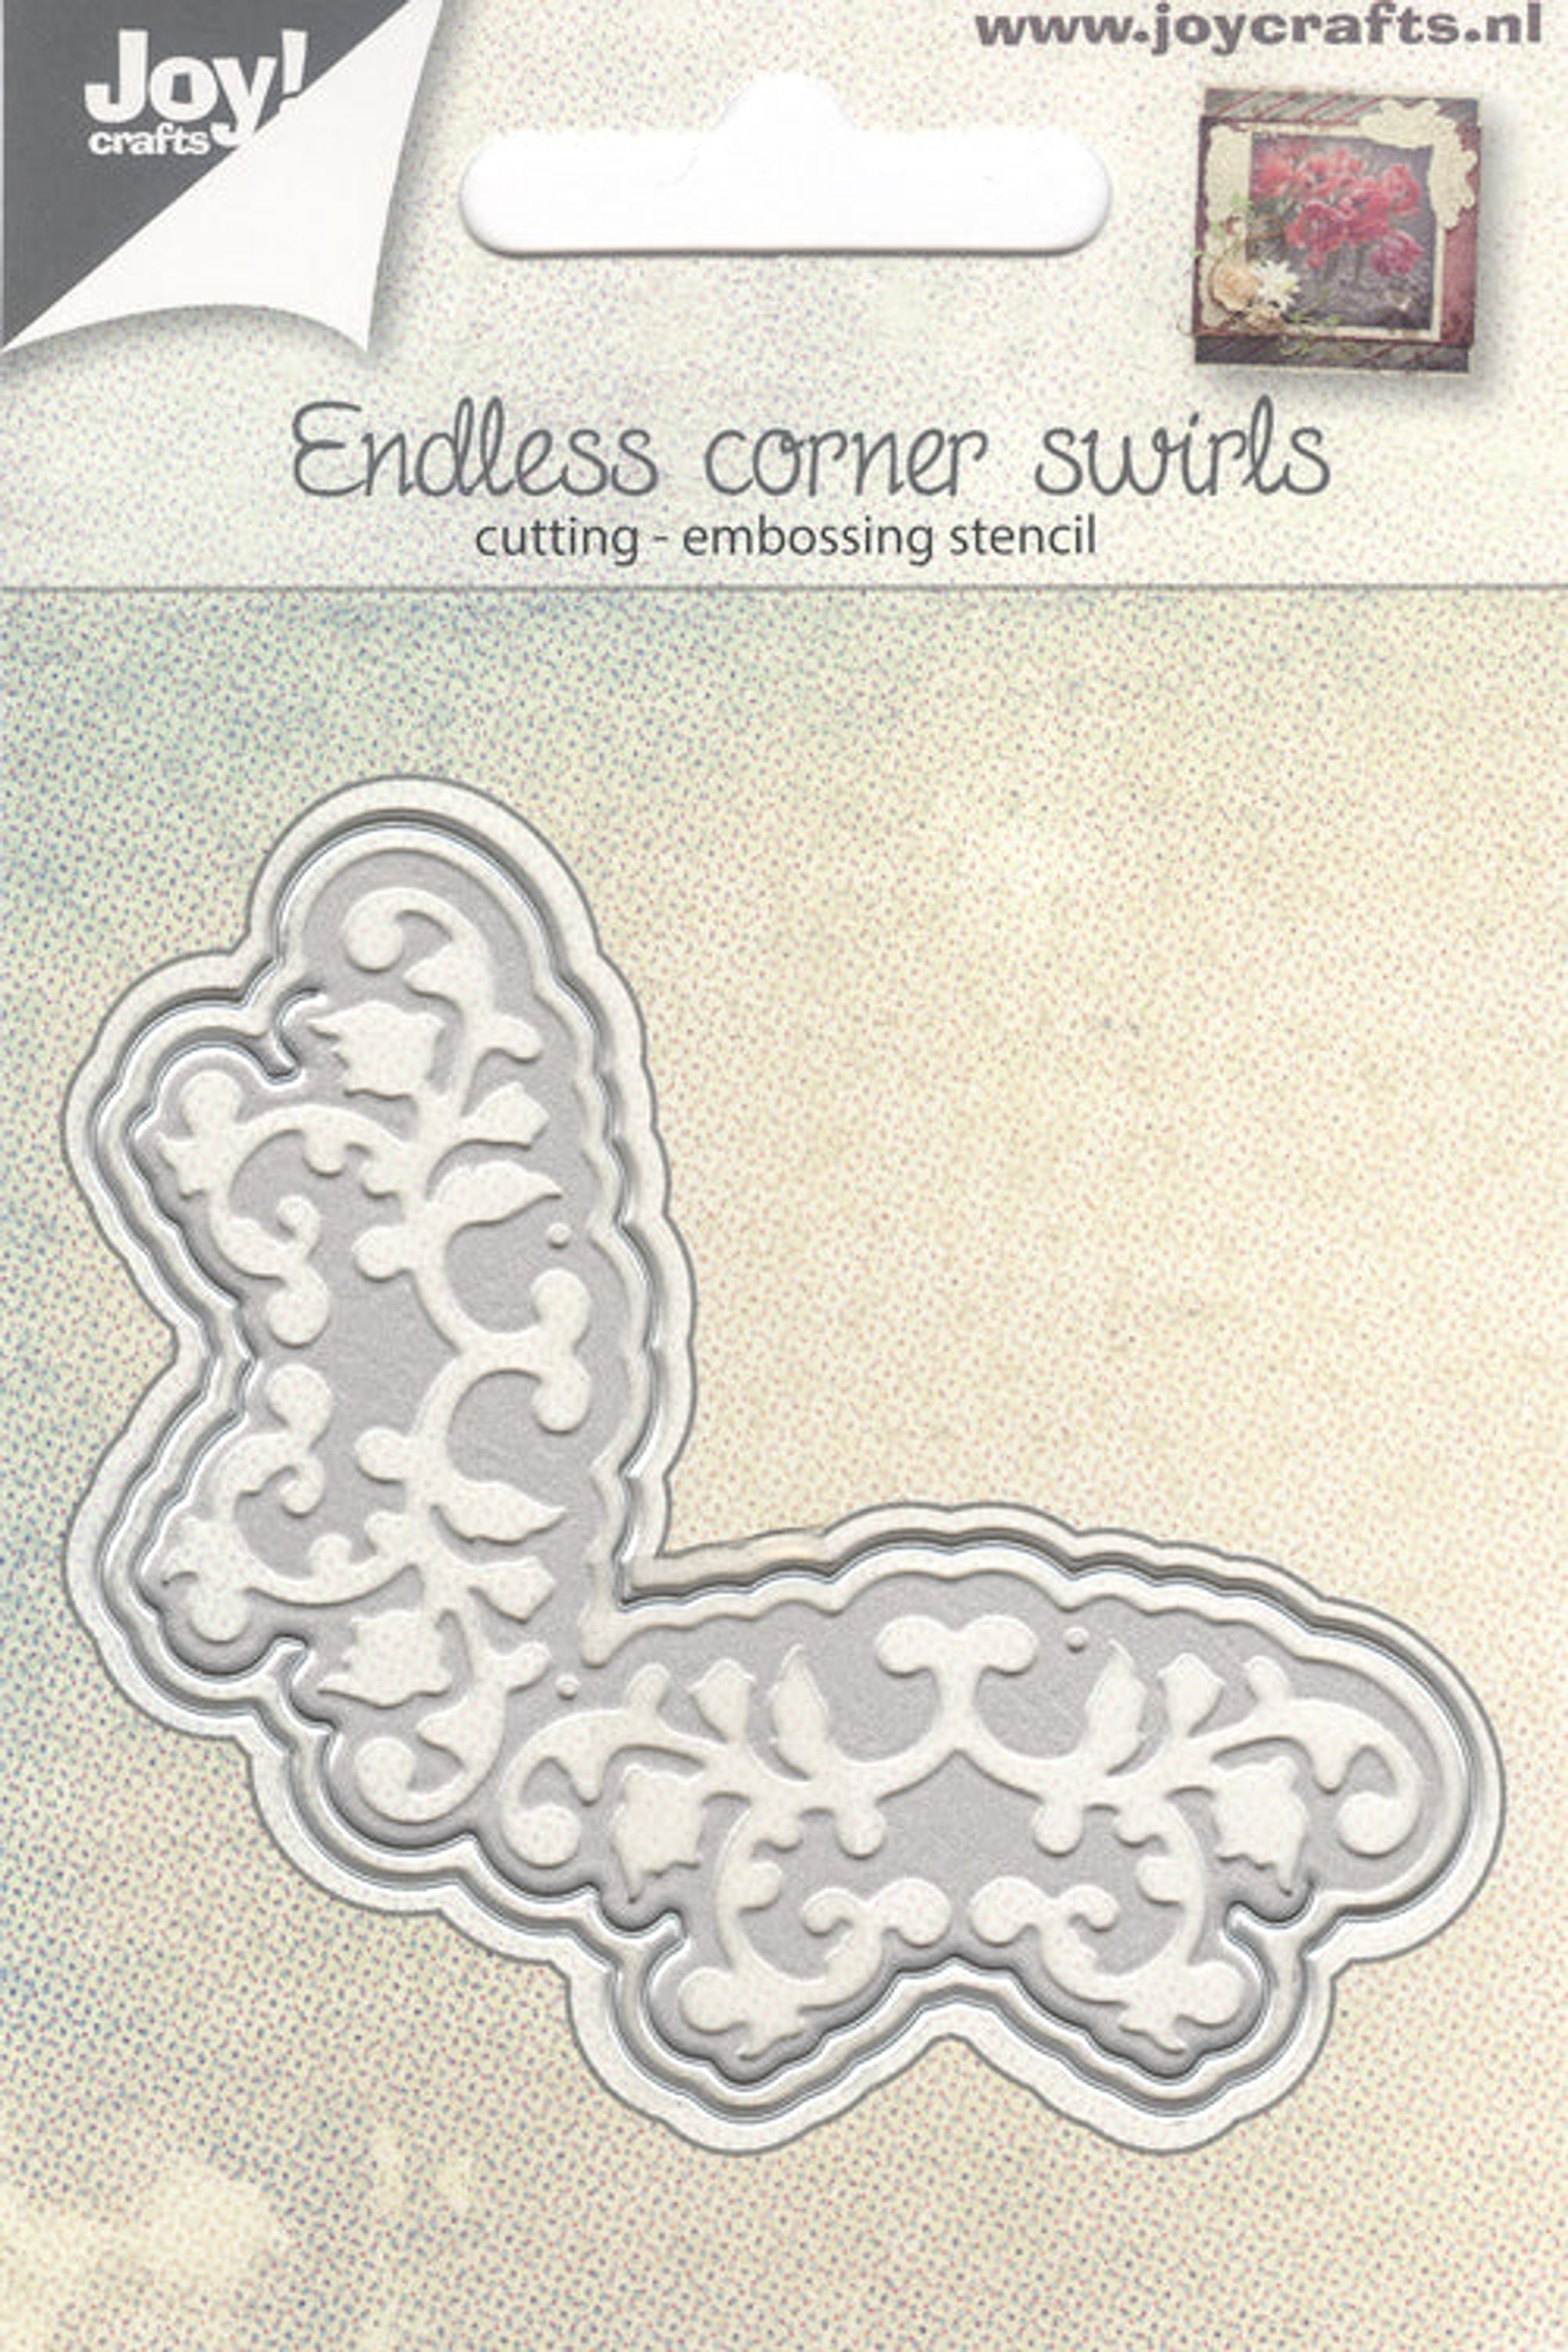 Joy Crafts -Cutting die - Endless Corners with Swirls